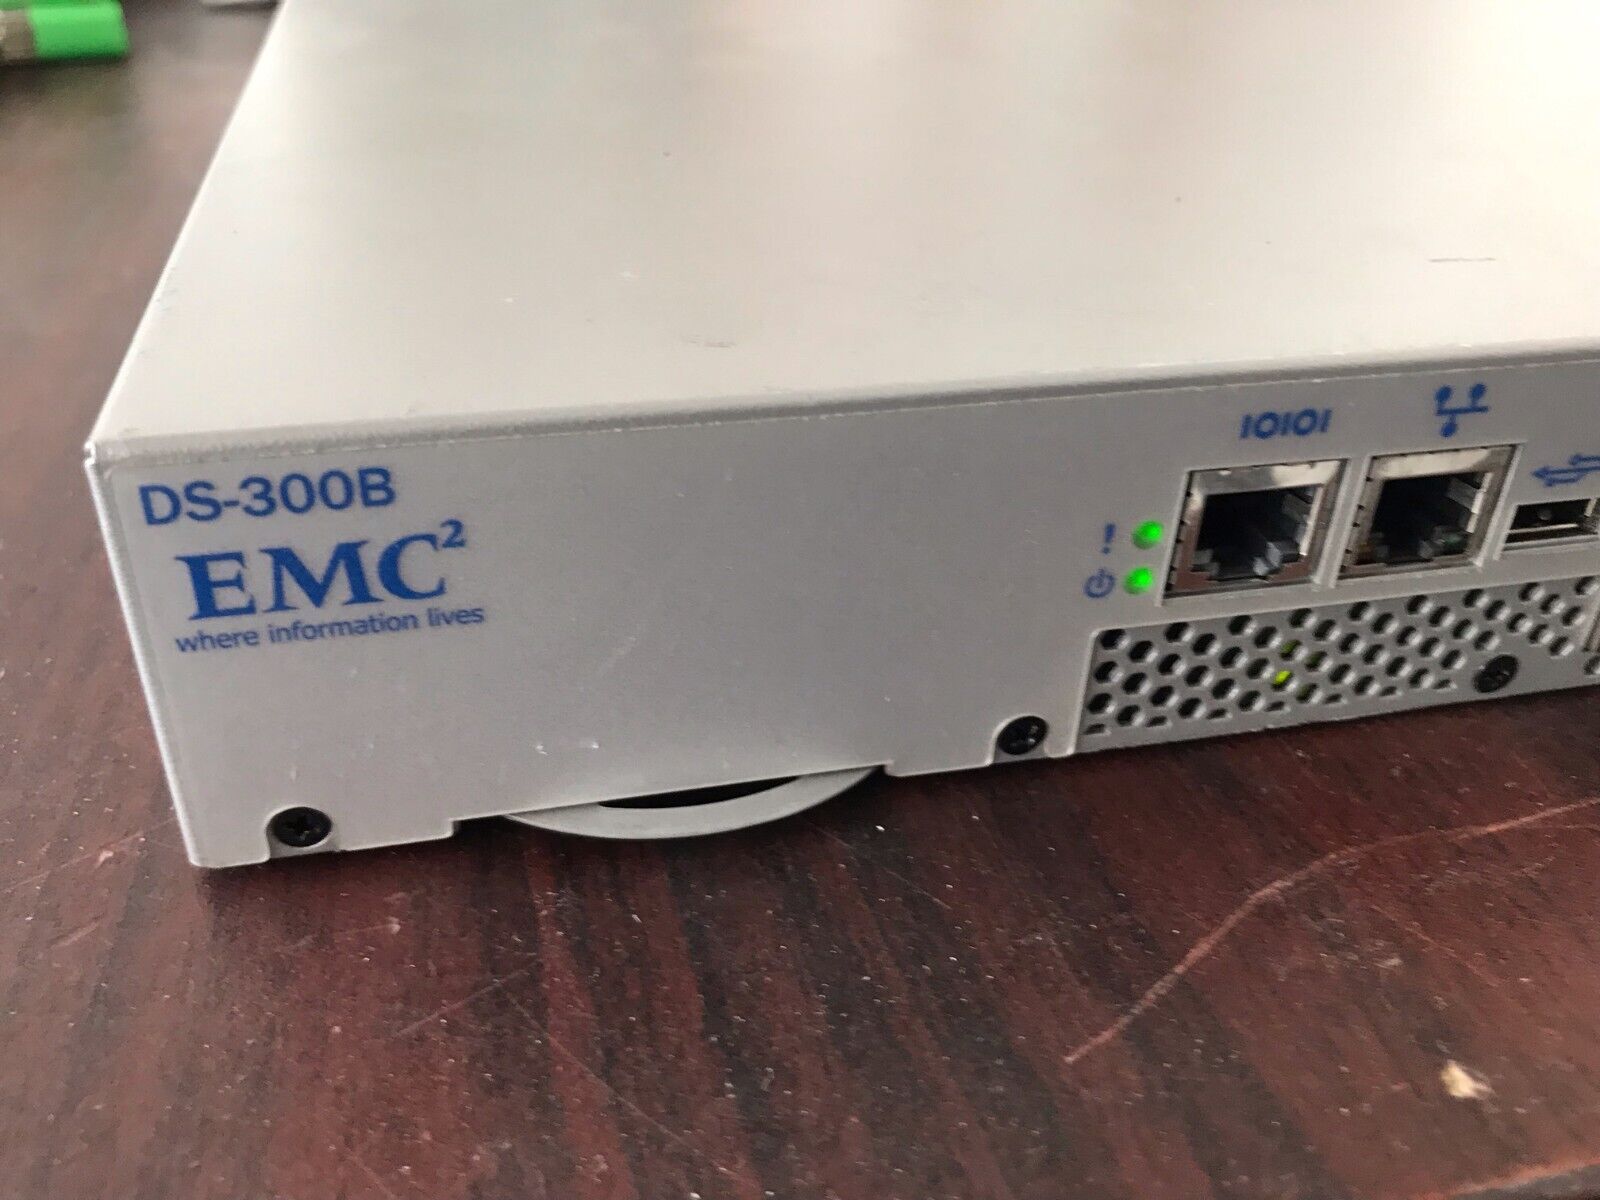 Brocade Emc2 Ds-300b 24 Port Network Switch WITH 1 SFP 8GB